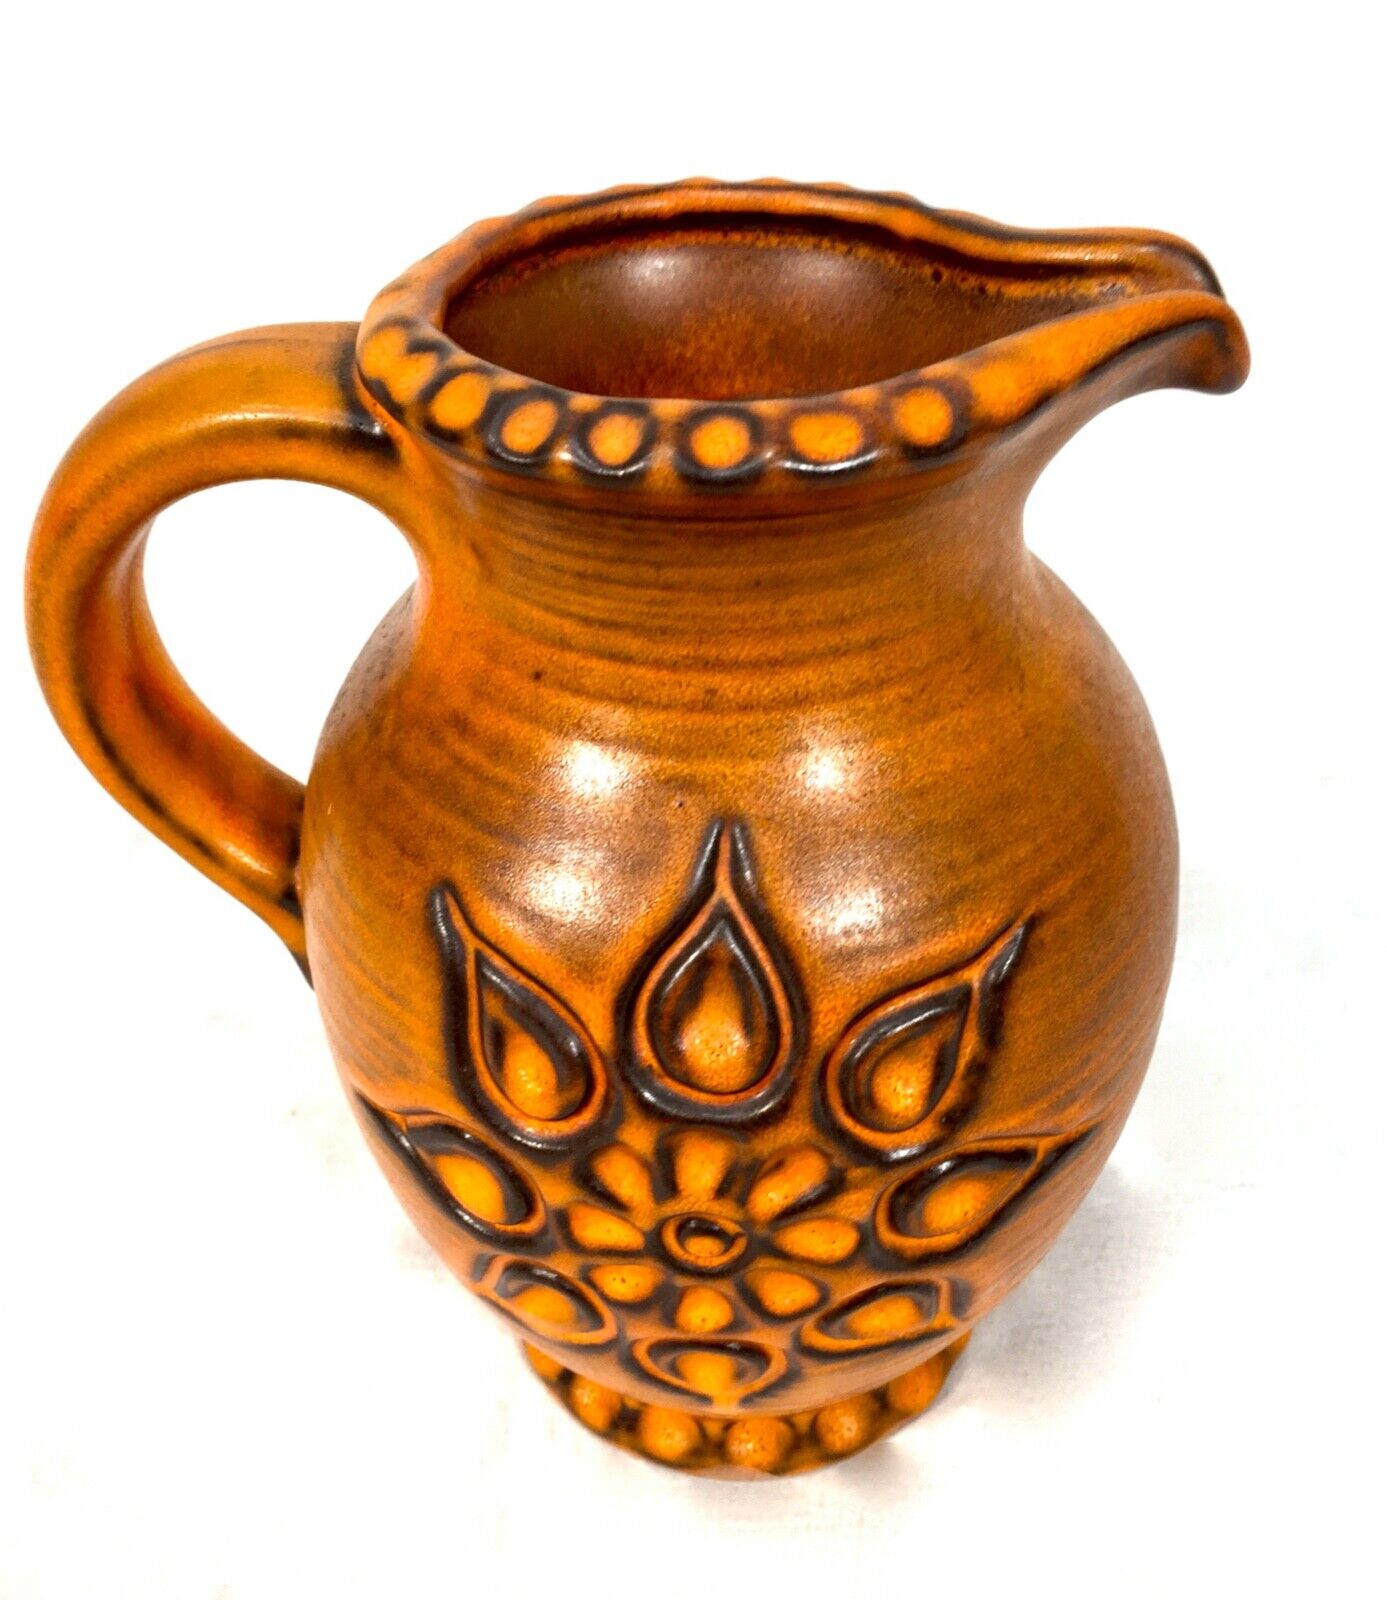 Vintage West German Pottery Fat Vase / Jug orange & Brown /  Retro 1970s